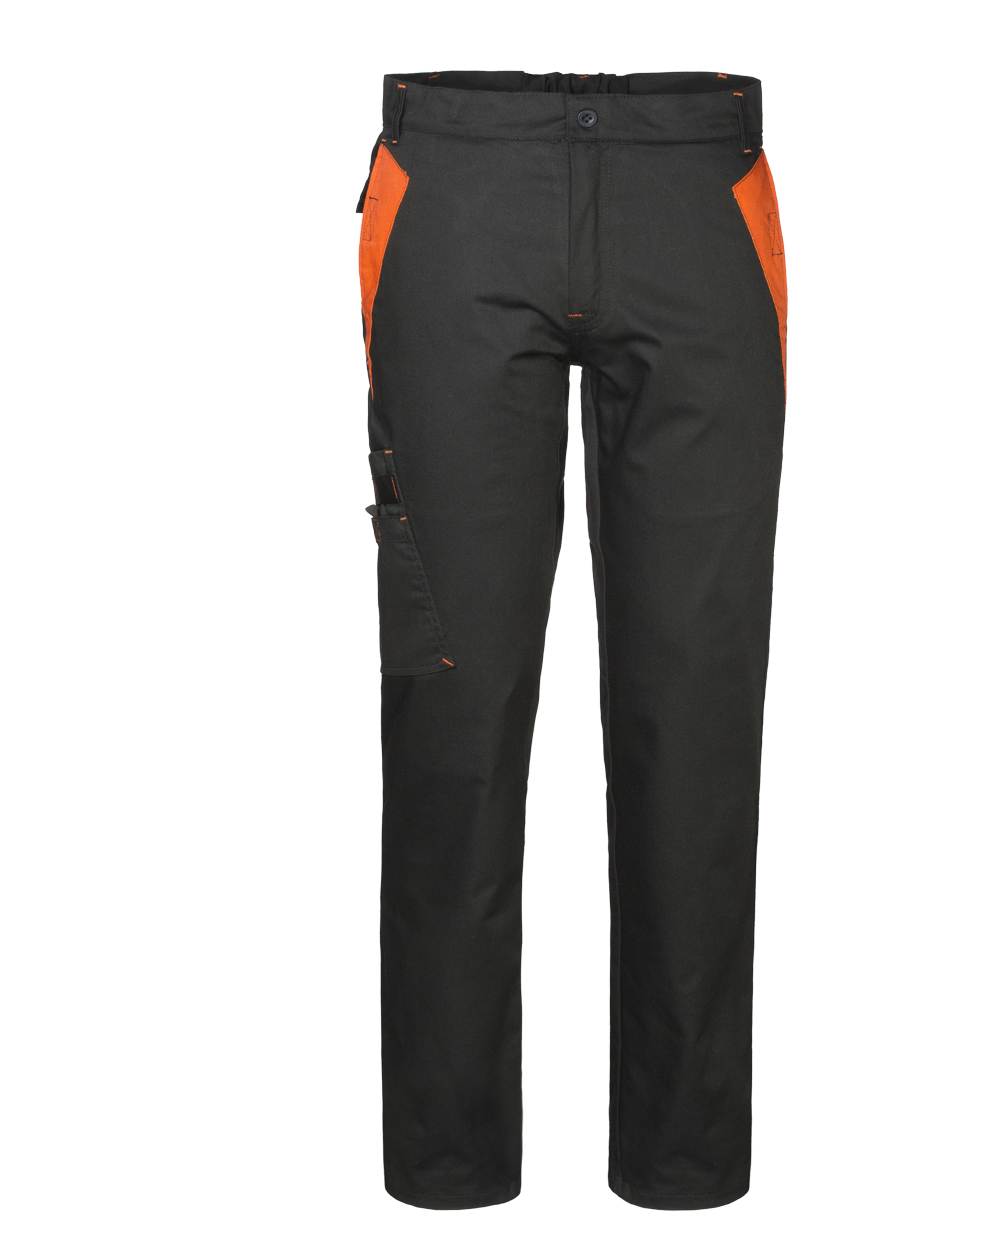 Pantalone Silverstone nero/arancio